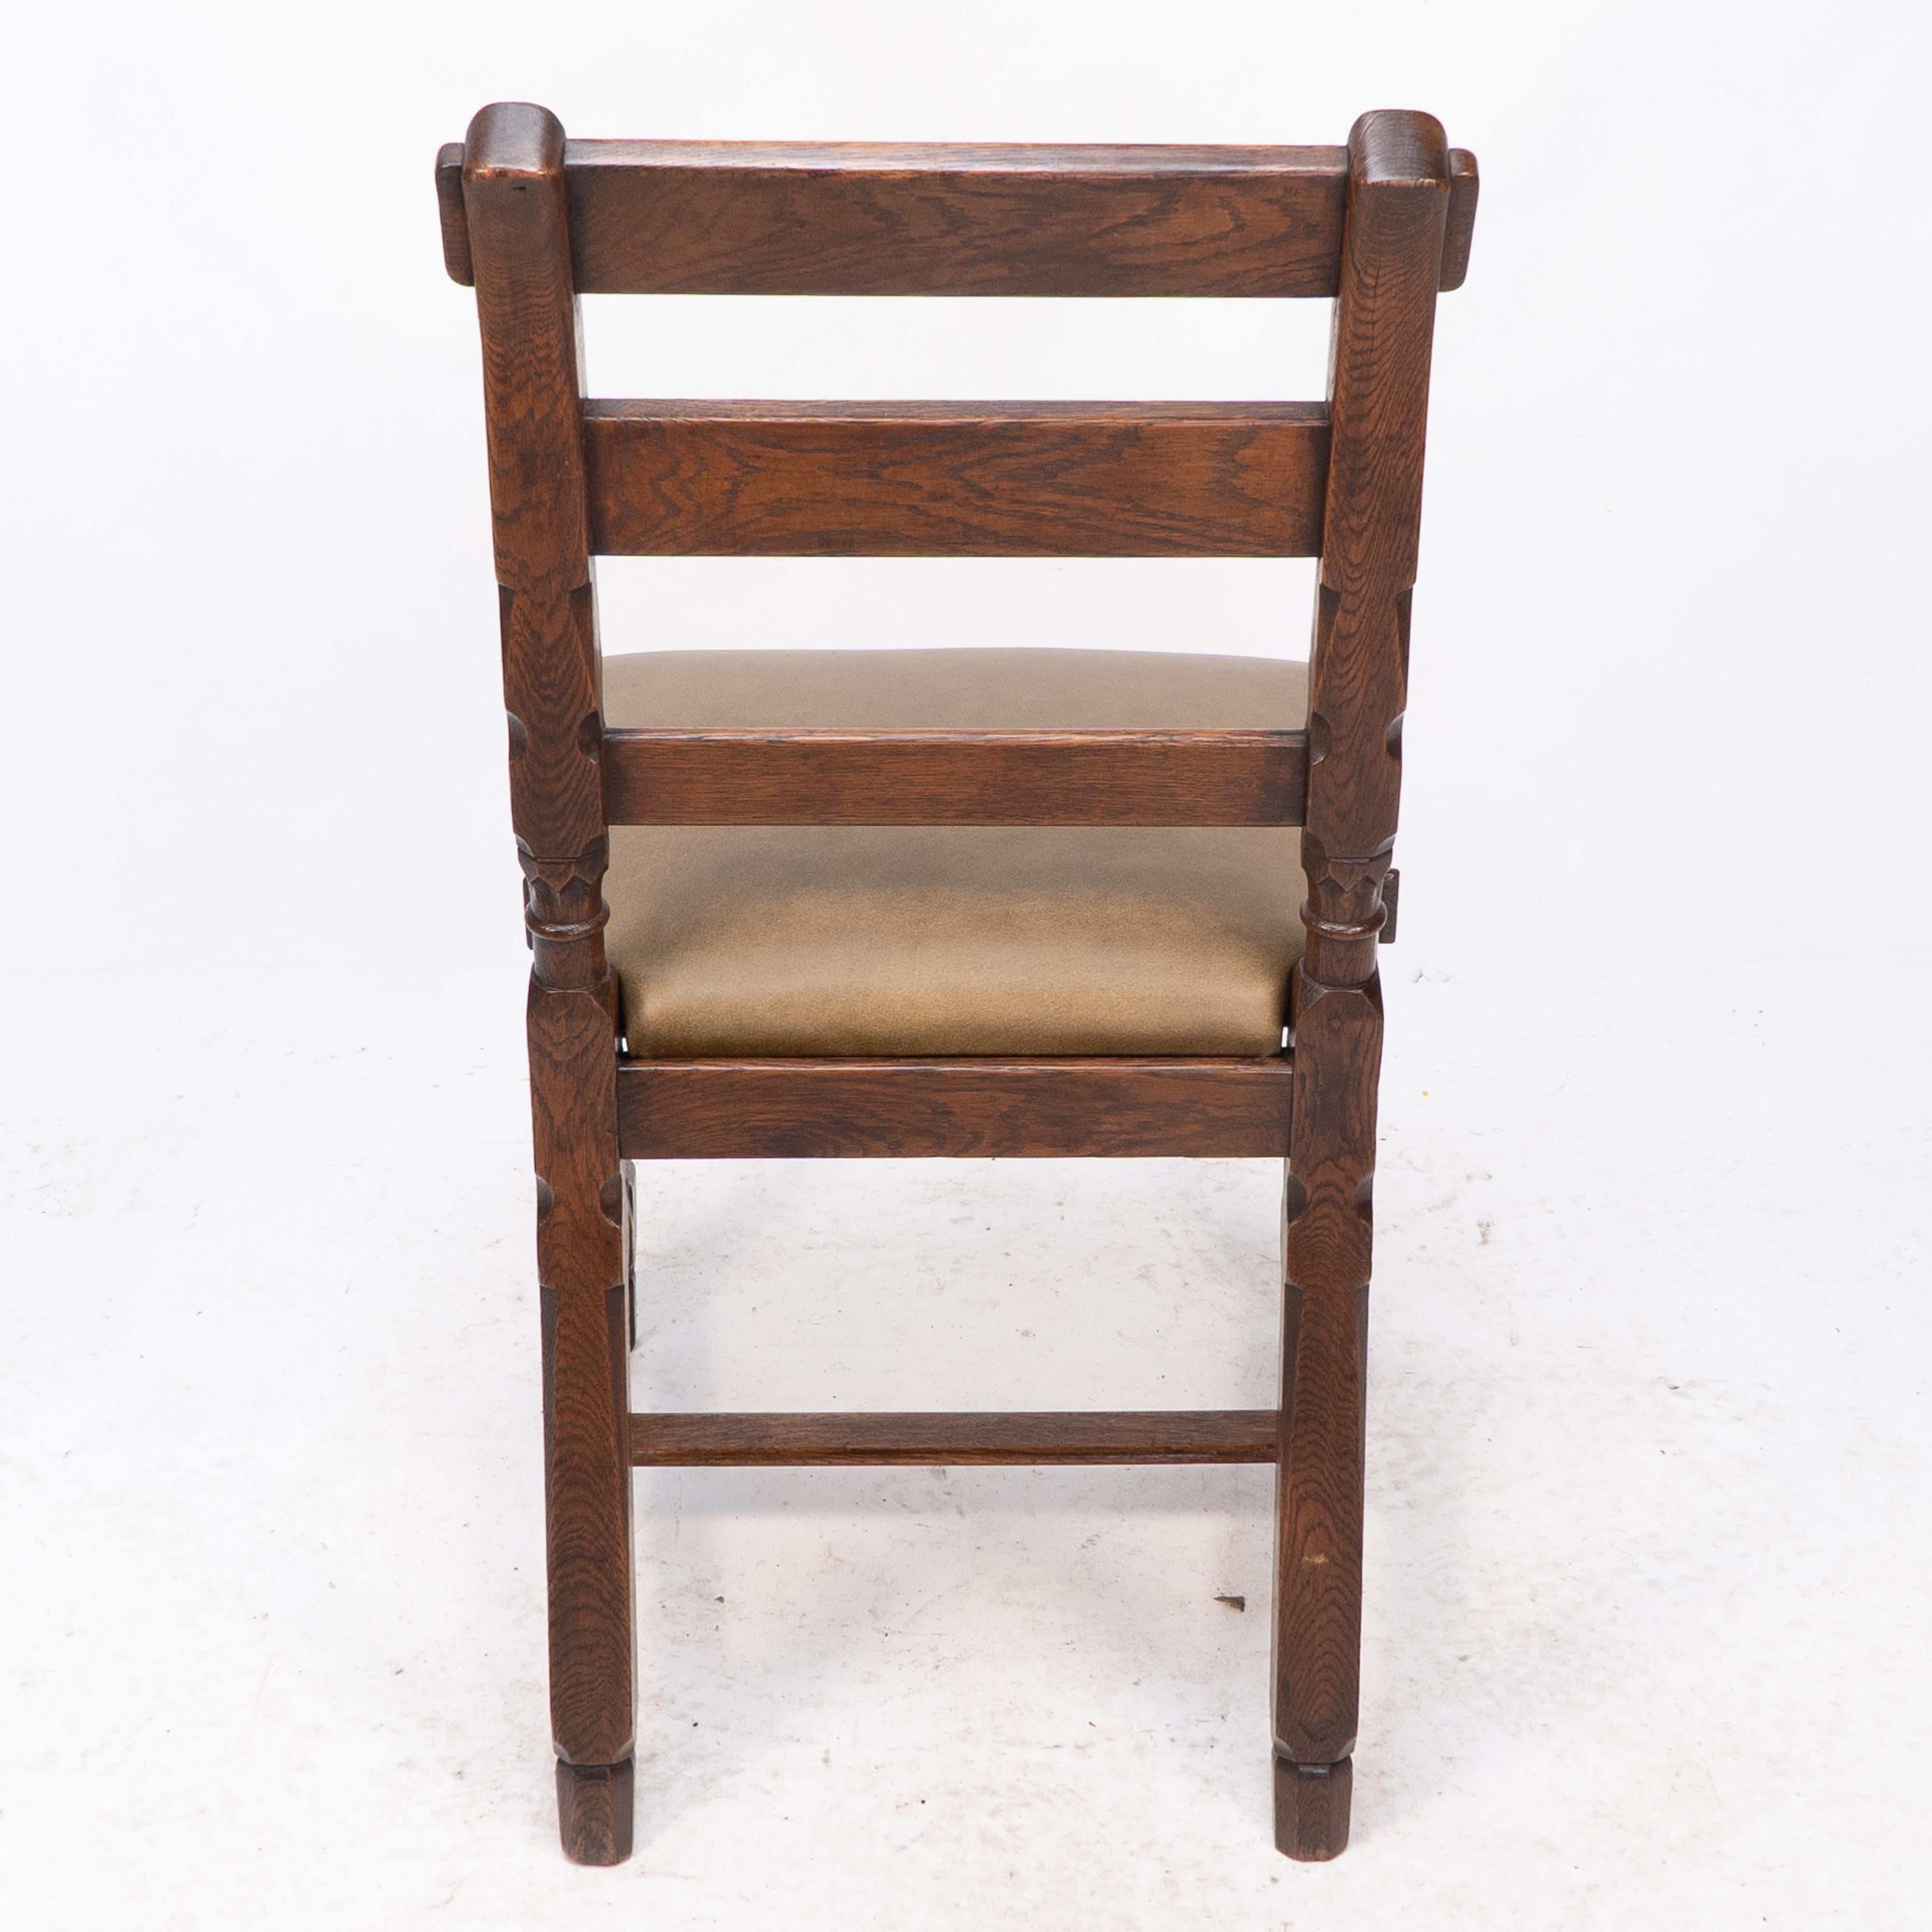 J P Seddon attri. An Aesthetic Movement oak side chair with ebonized circles For Sale 10